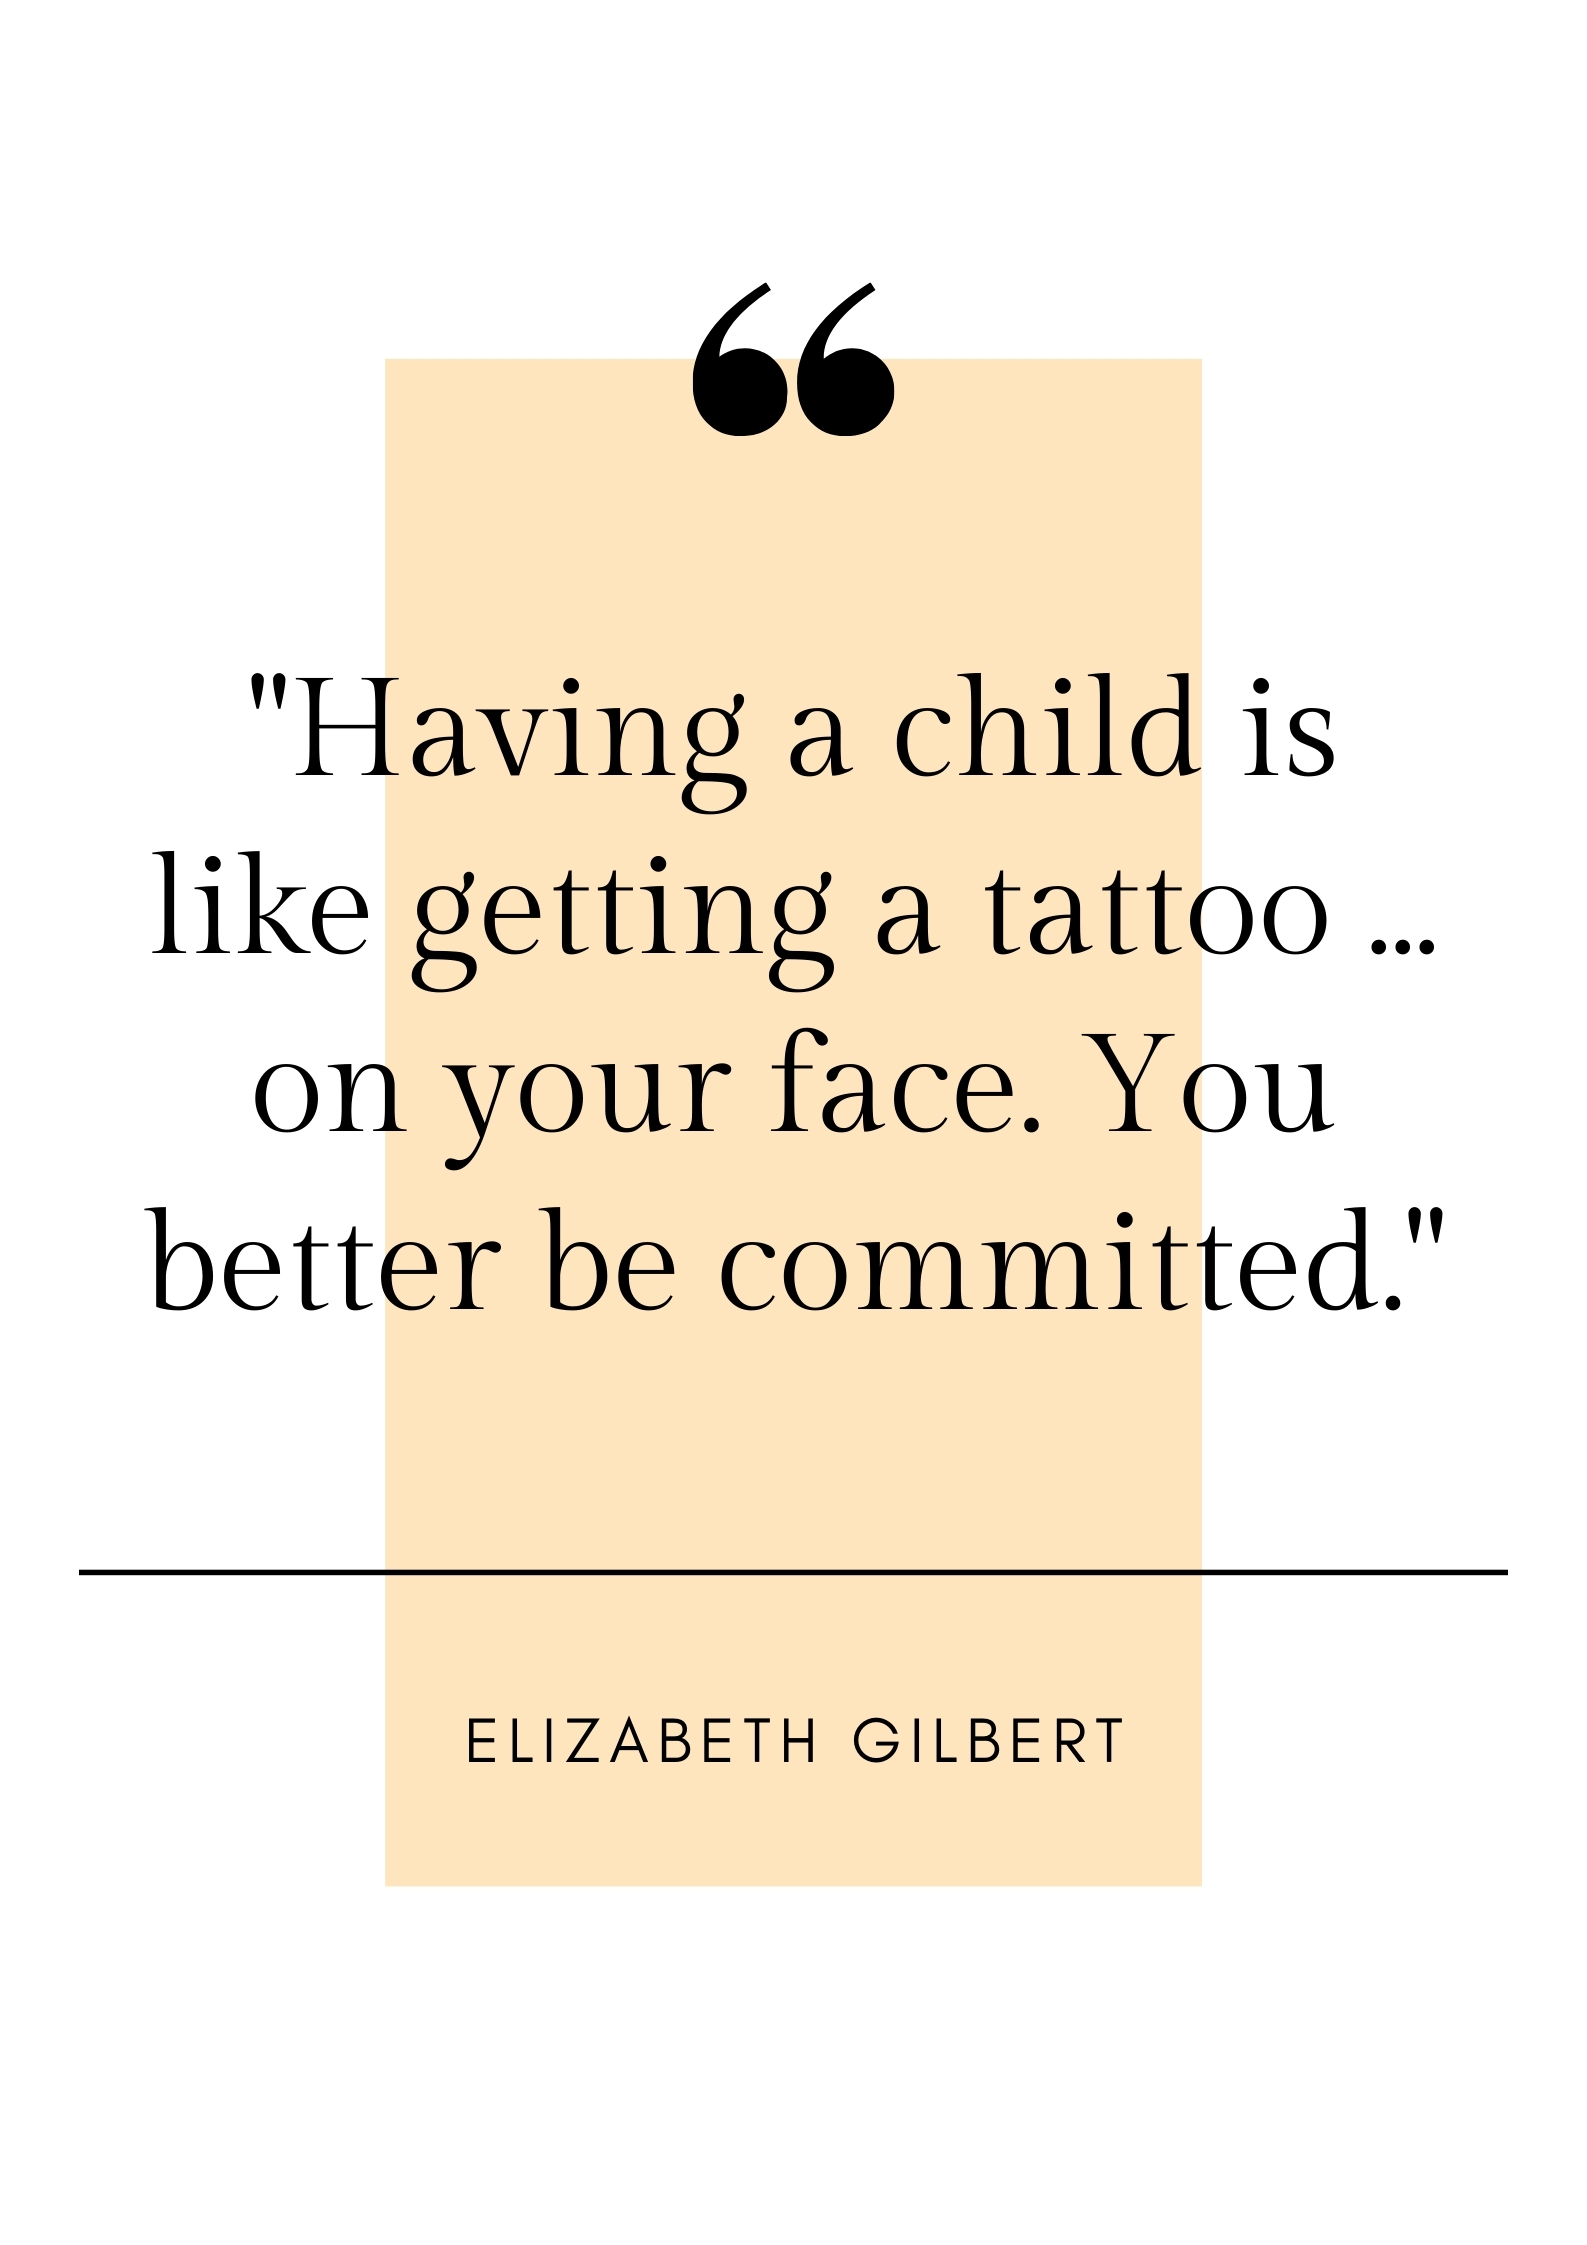 Elizabeth gilbert quote